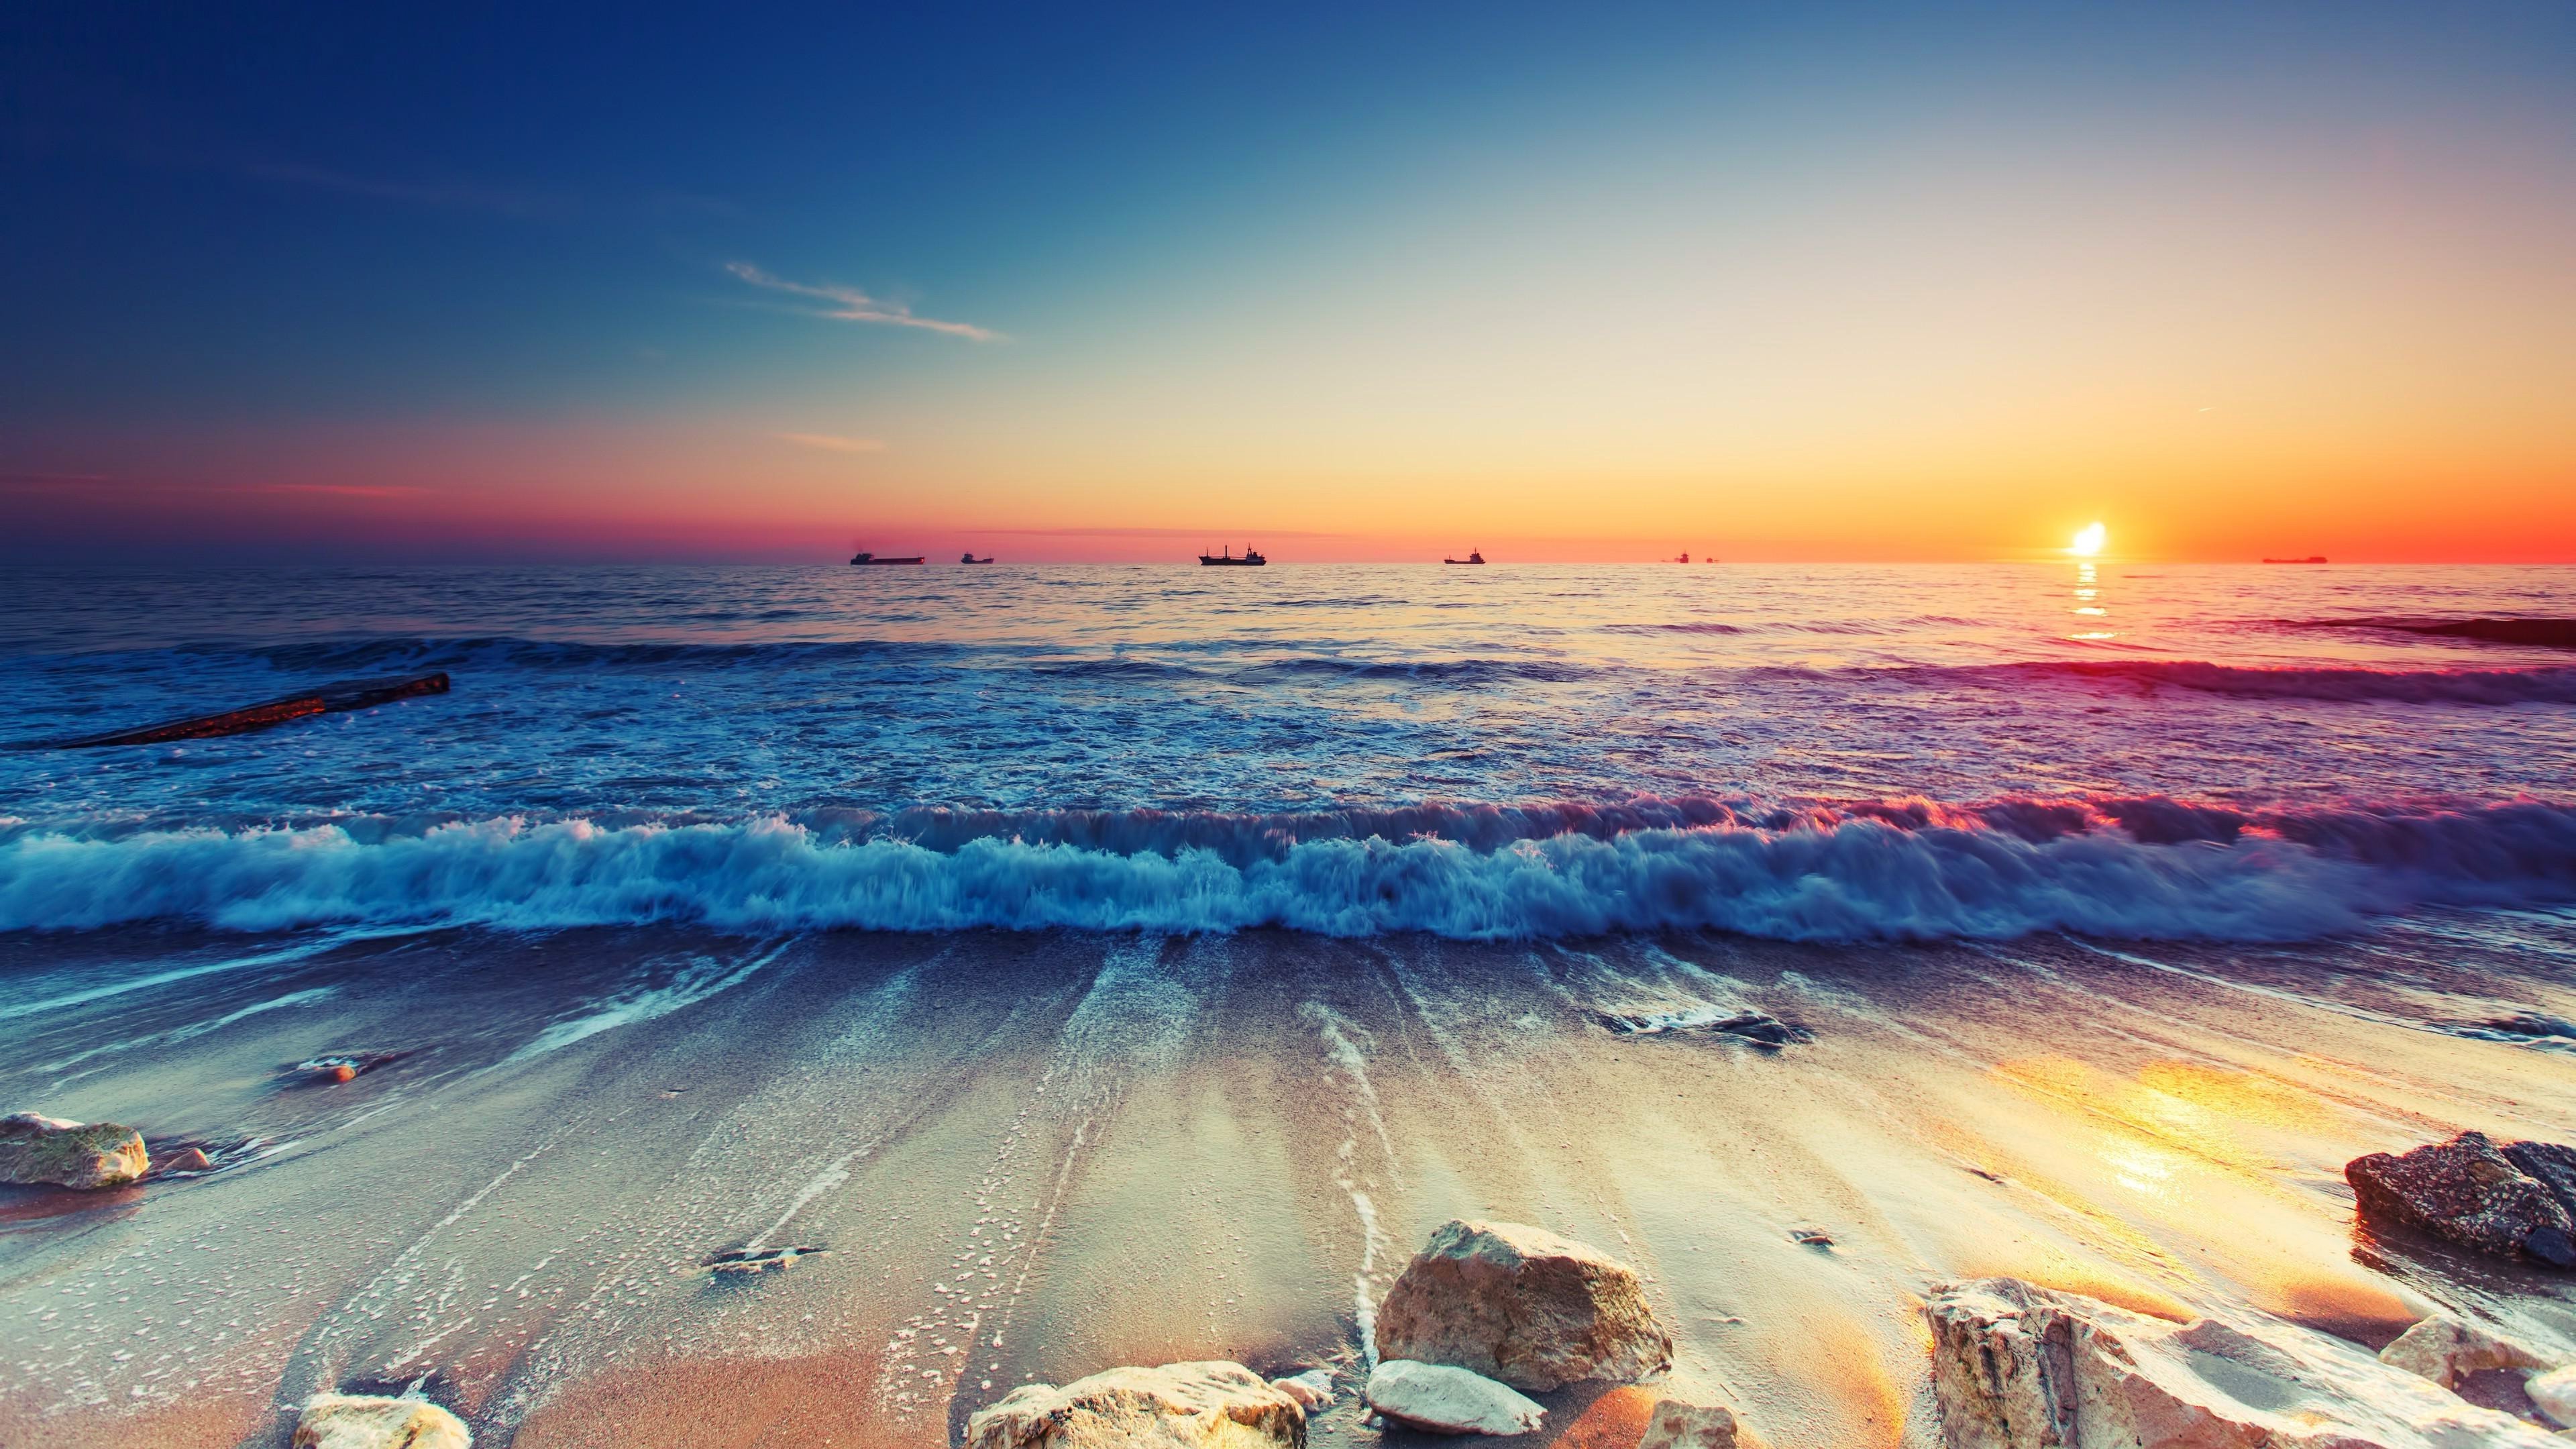 4k Wallpaper Beach Sunset Hd Wallpaper For Desktop Background Images